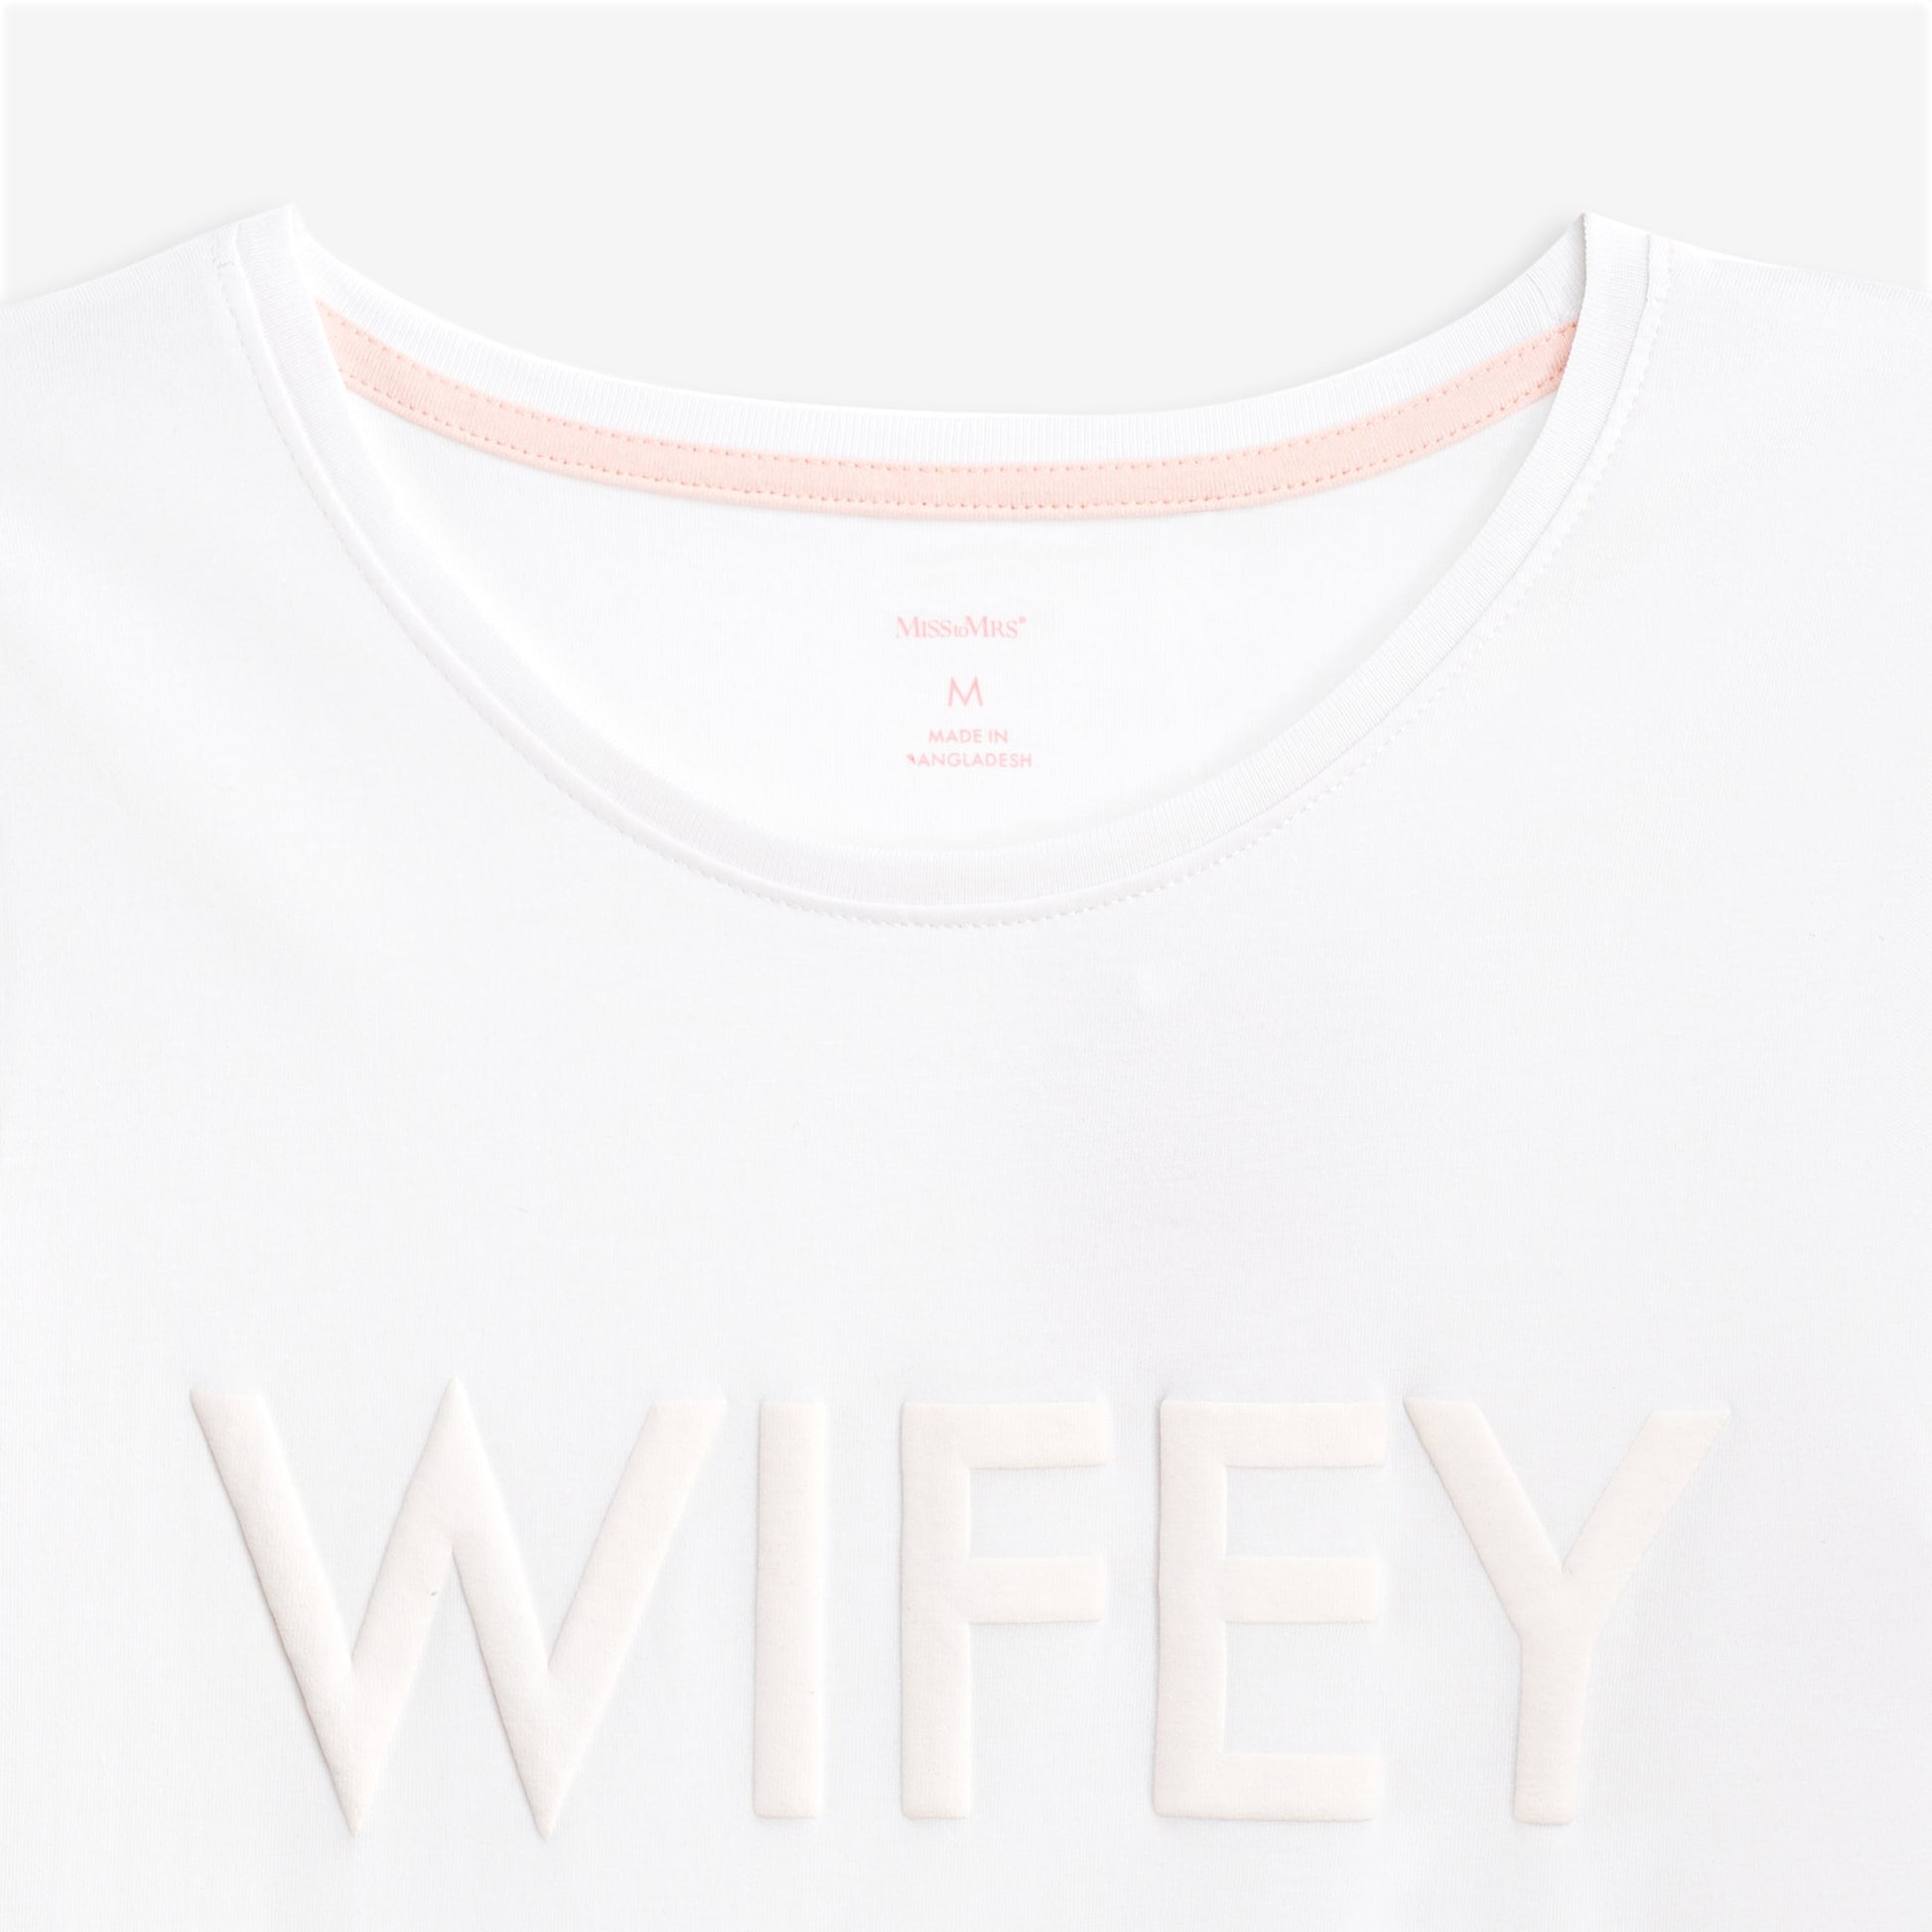 Wifey Puff Print T-shirt Set. Crewneck white t-shirt made of high-quality 100% cotton.